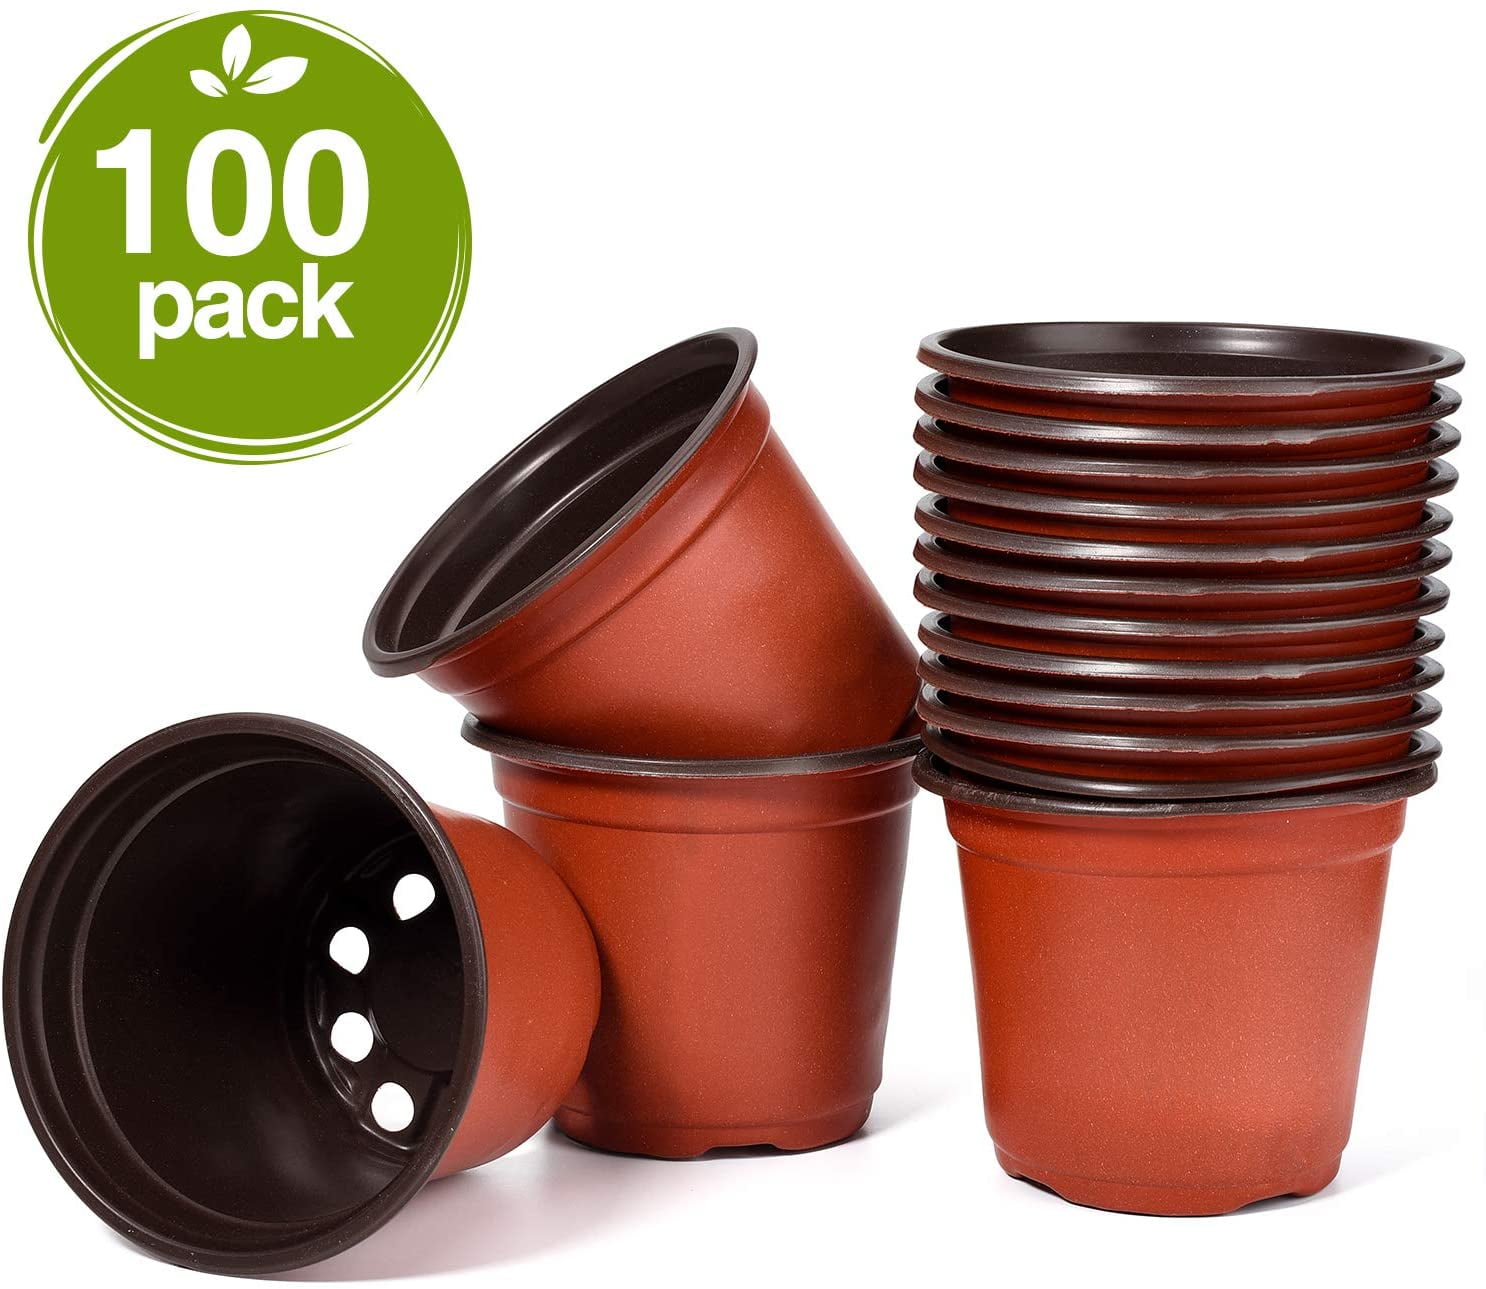 100 Pcs/set Garden Nursery Pots Flower Grow Raising Herbal Planter Containers